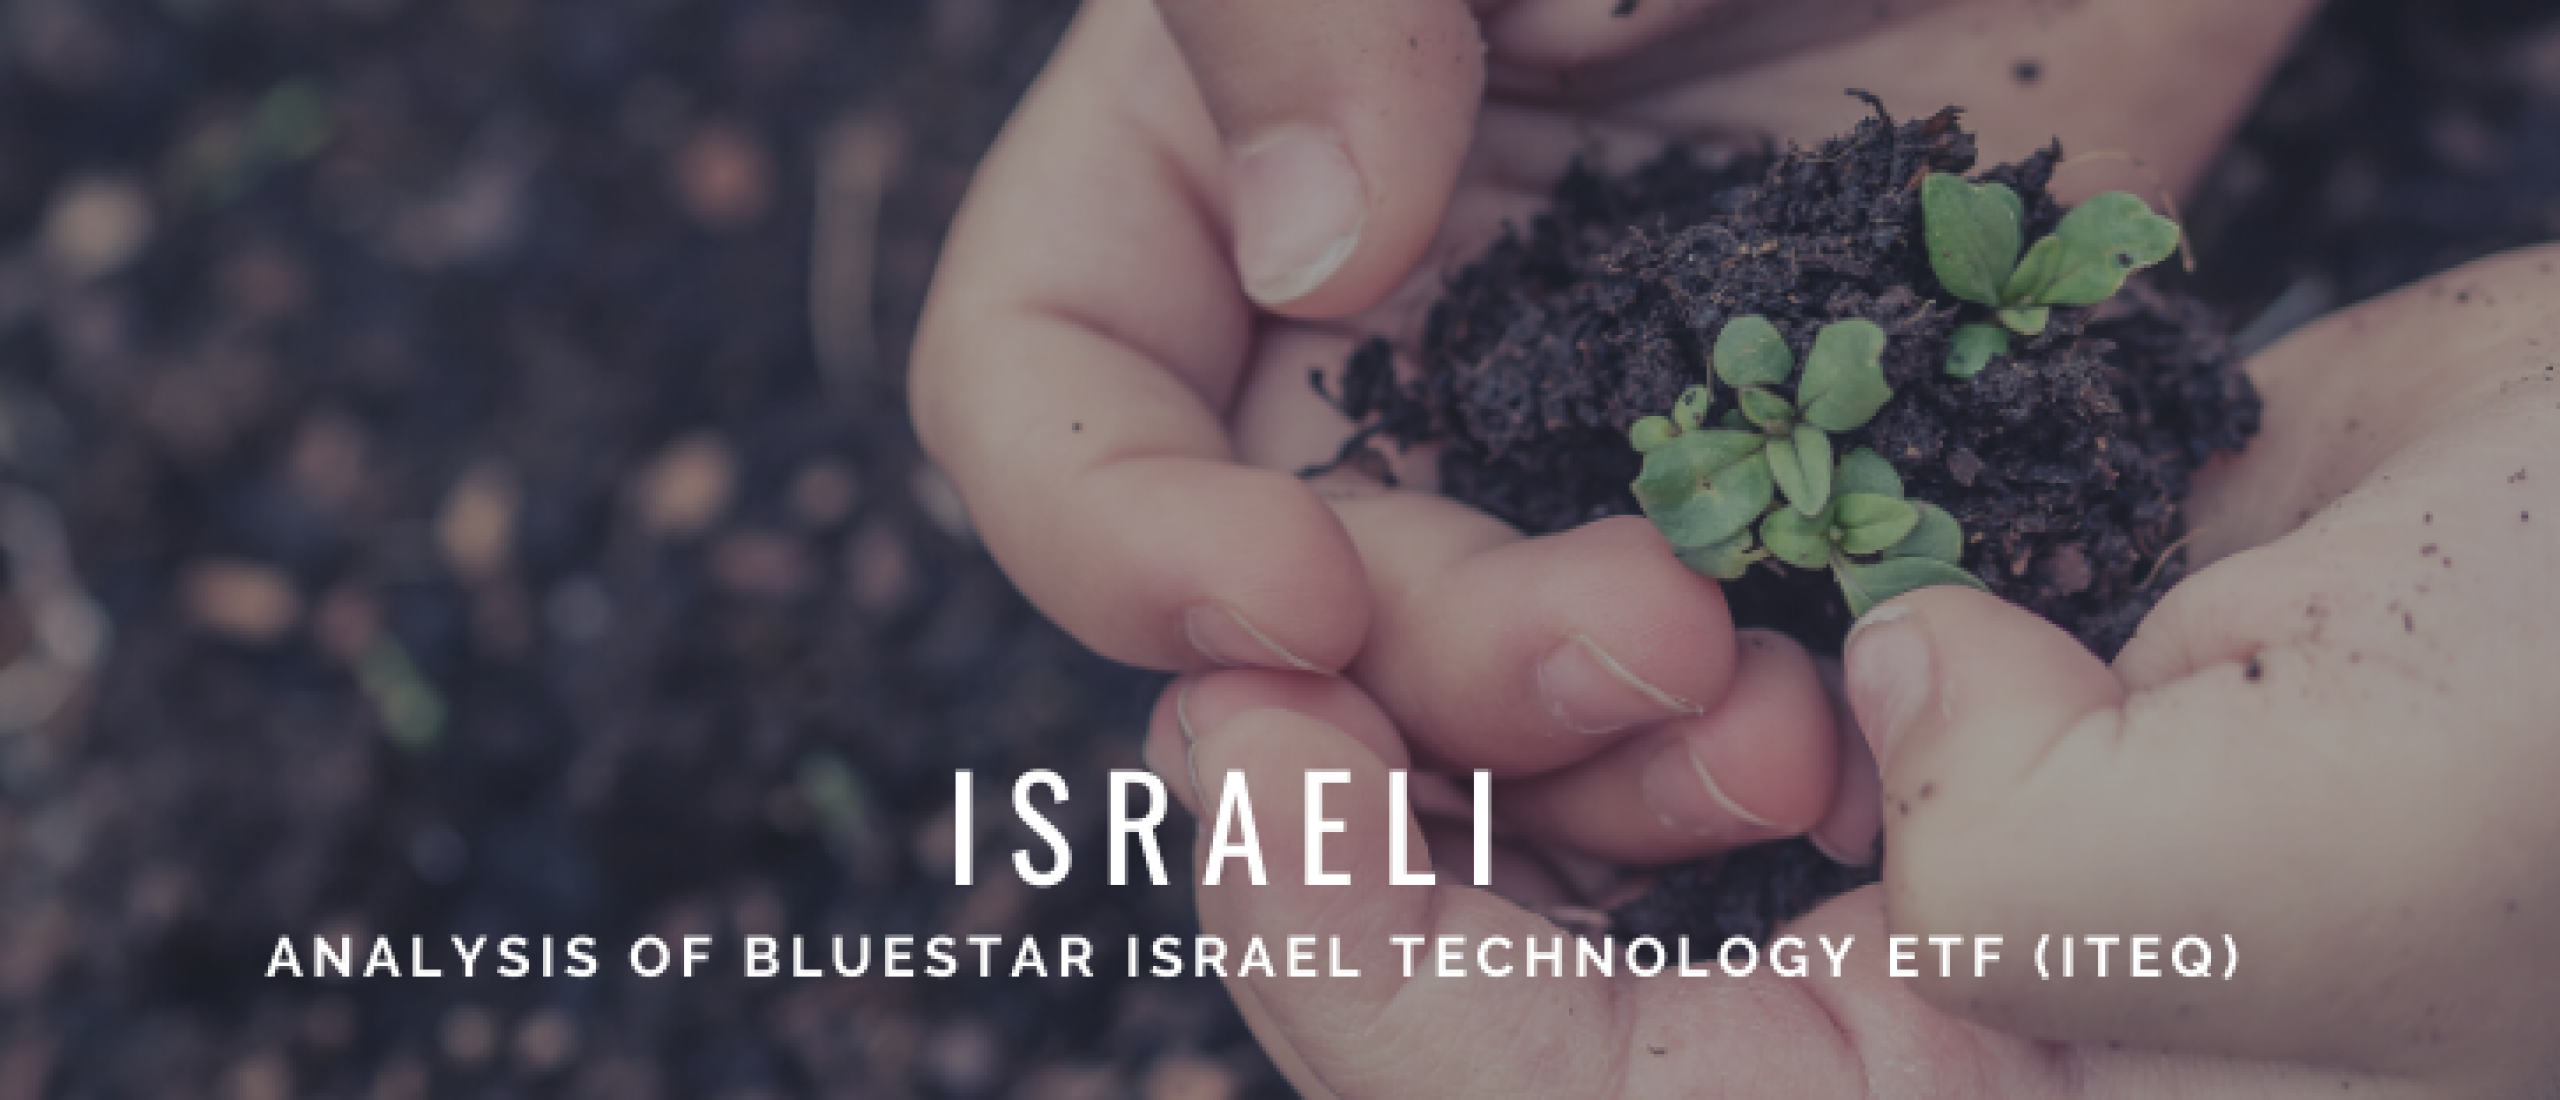 Analysis BlueStar Israel Technology ETF (ITEQ)